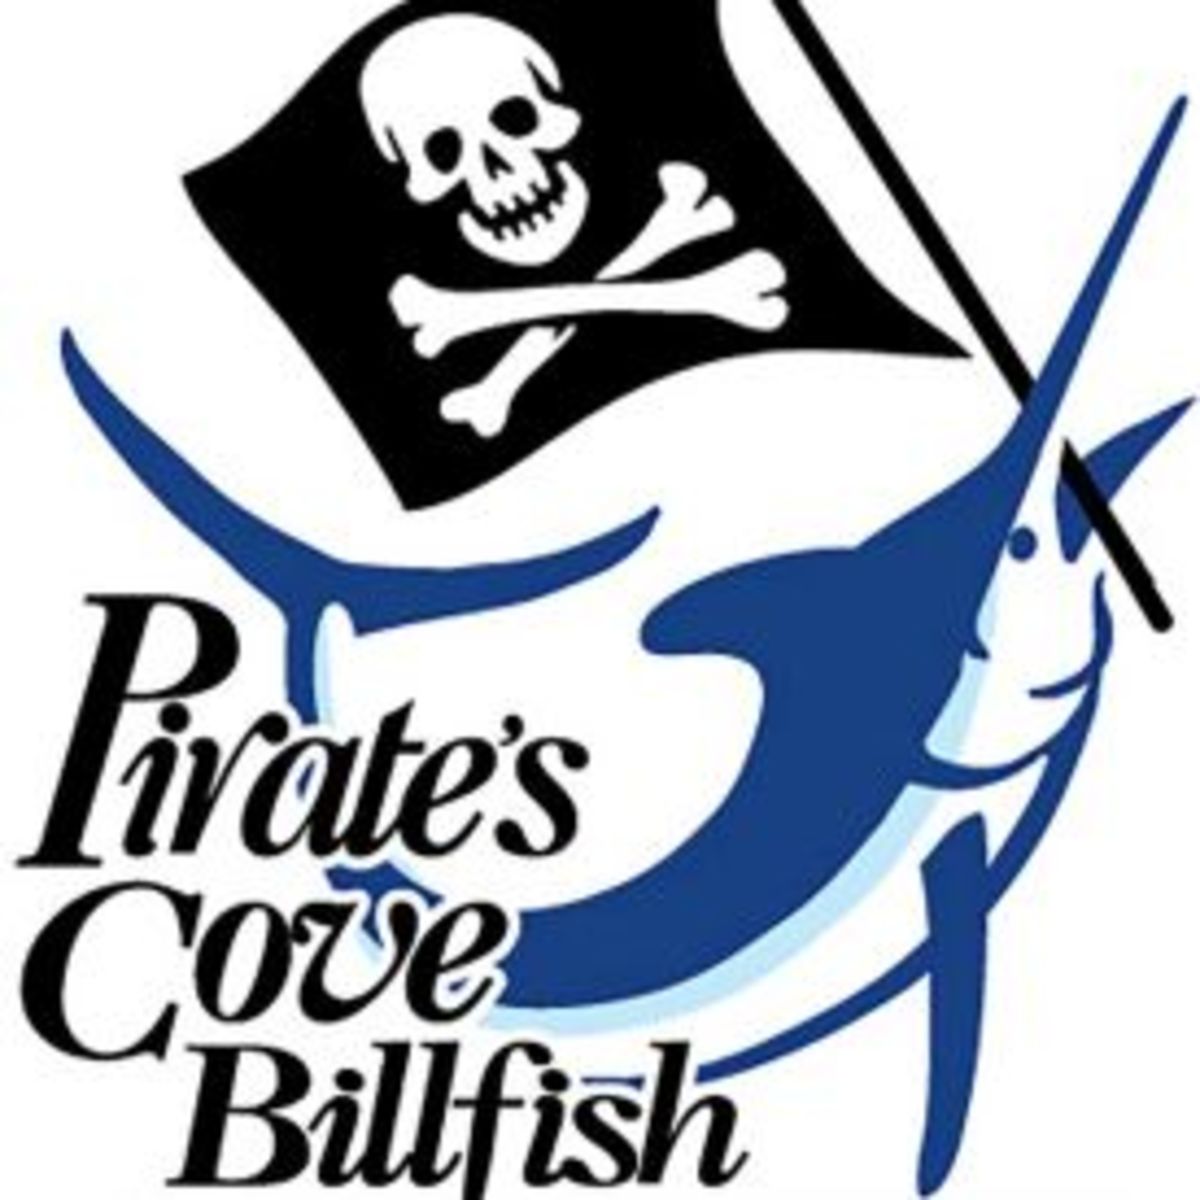 pirate-marlin-logo